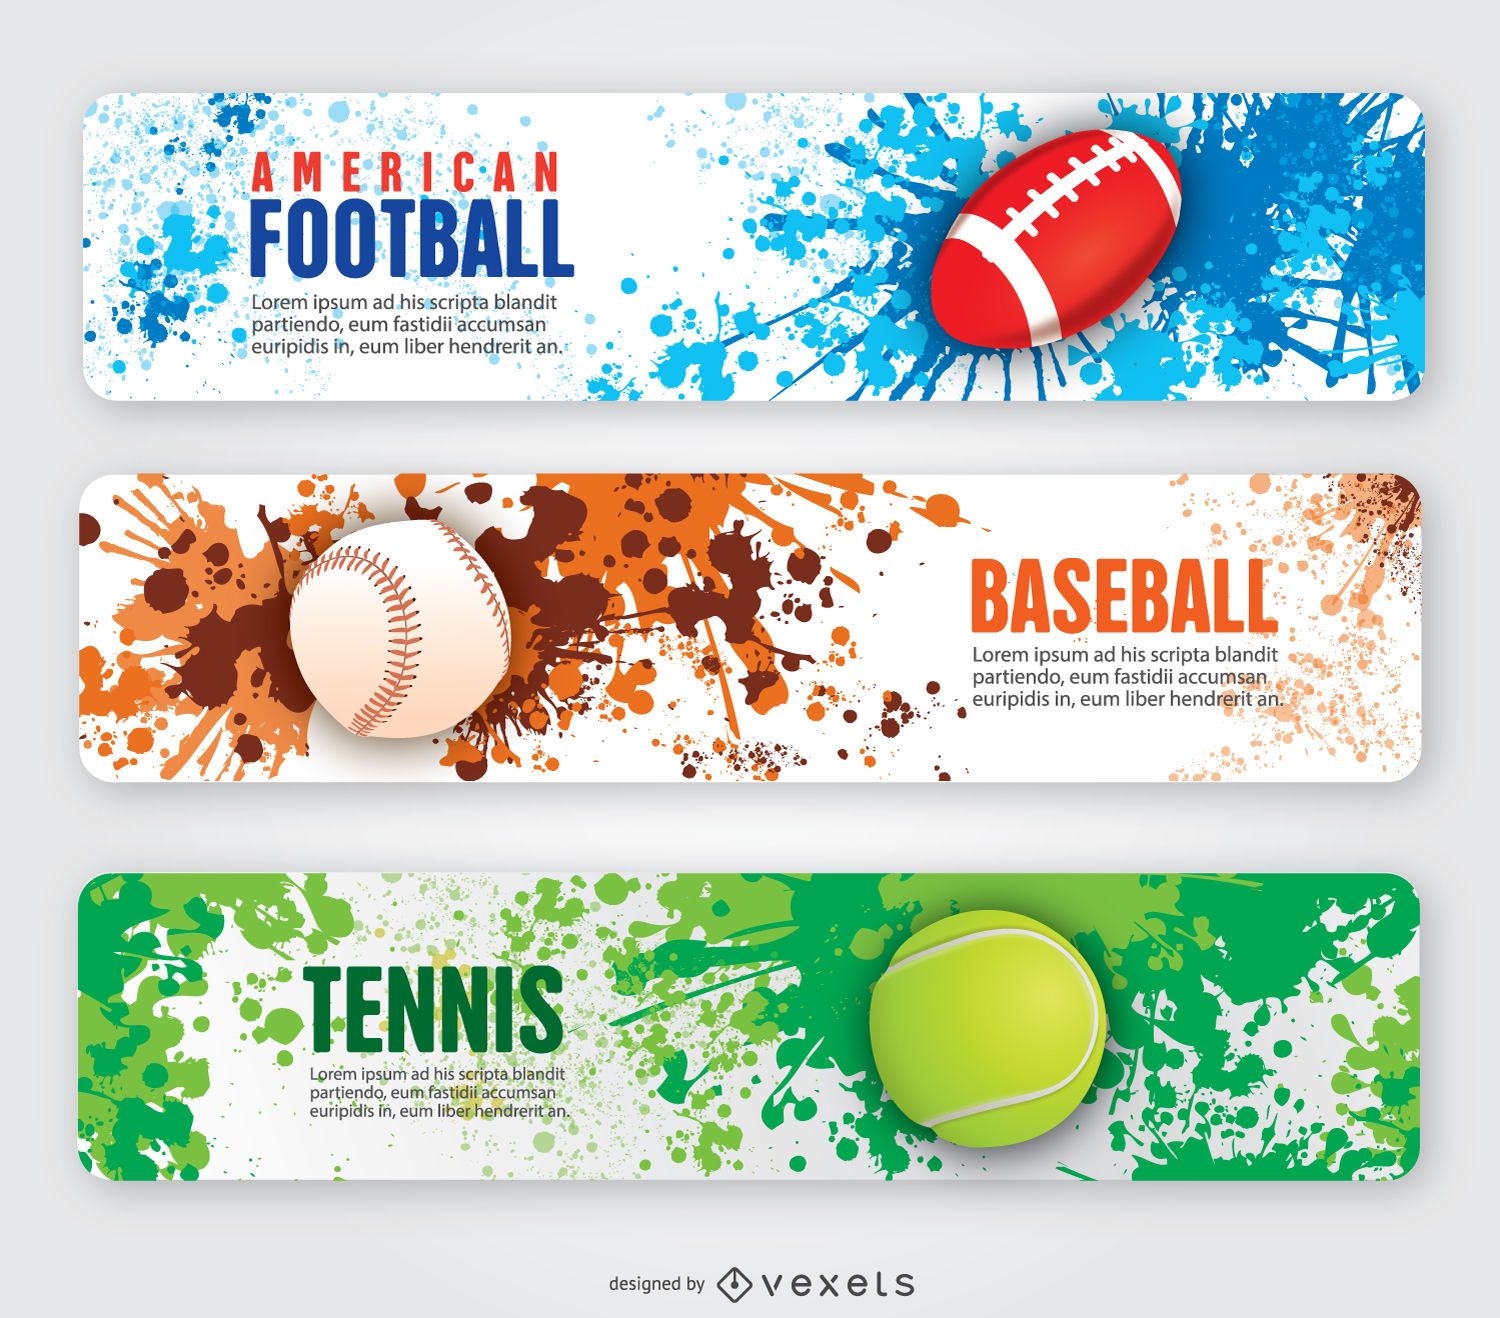 American football tennis and Baseball Banners